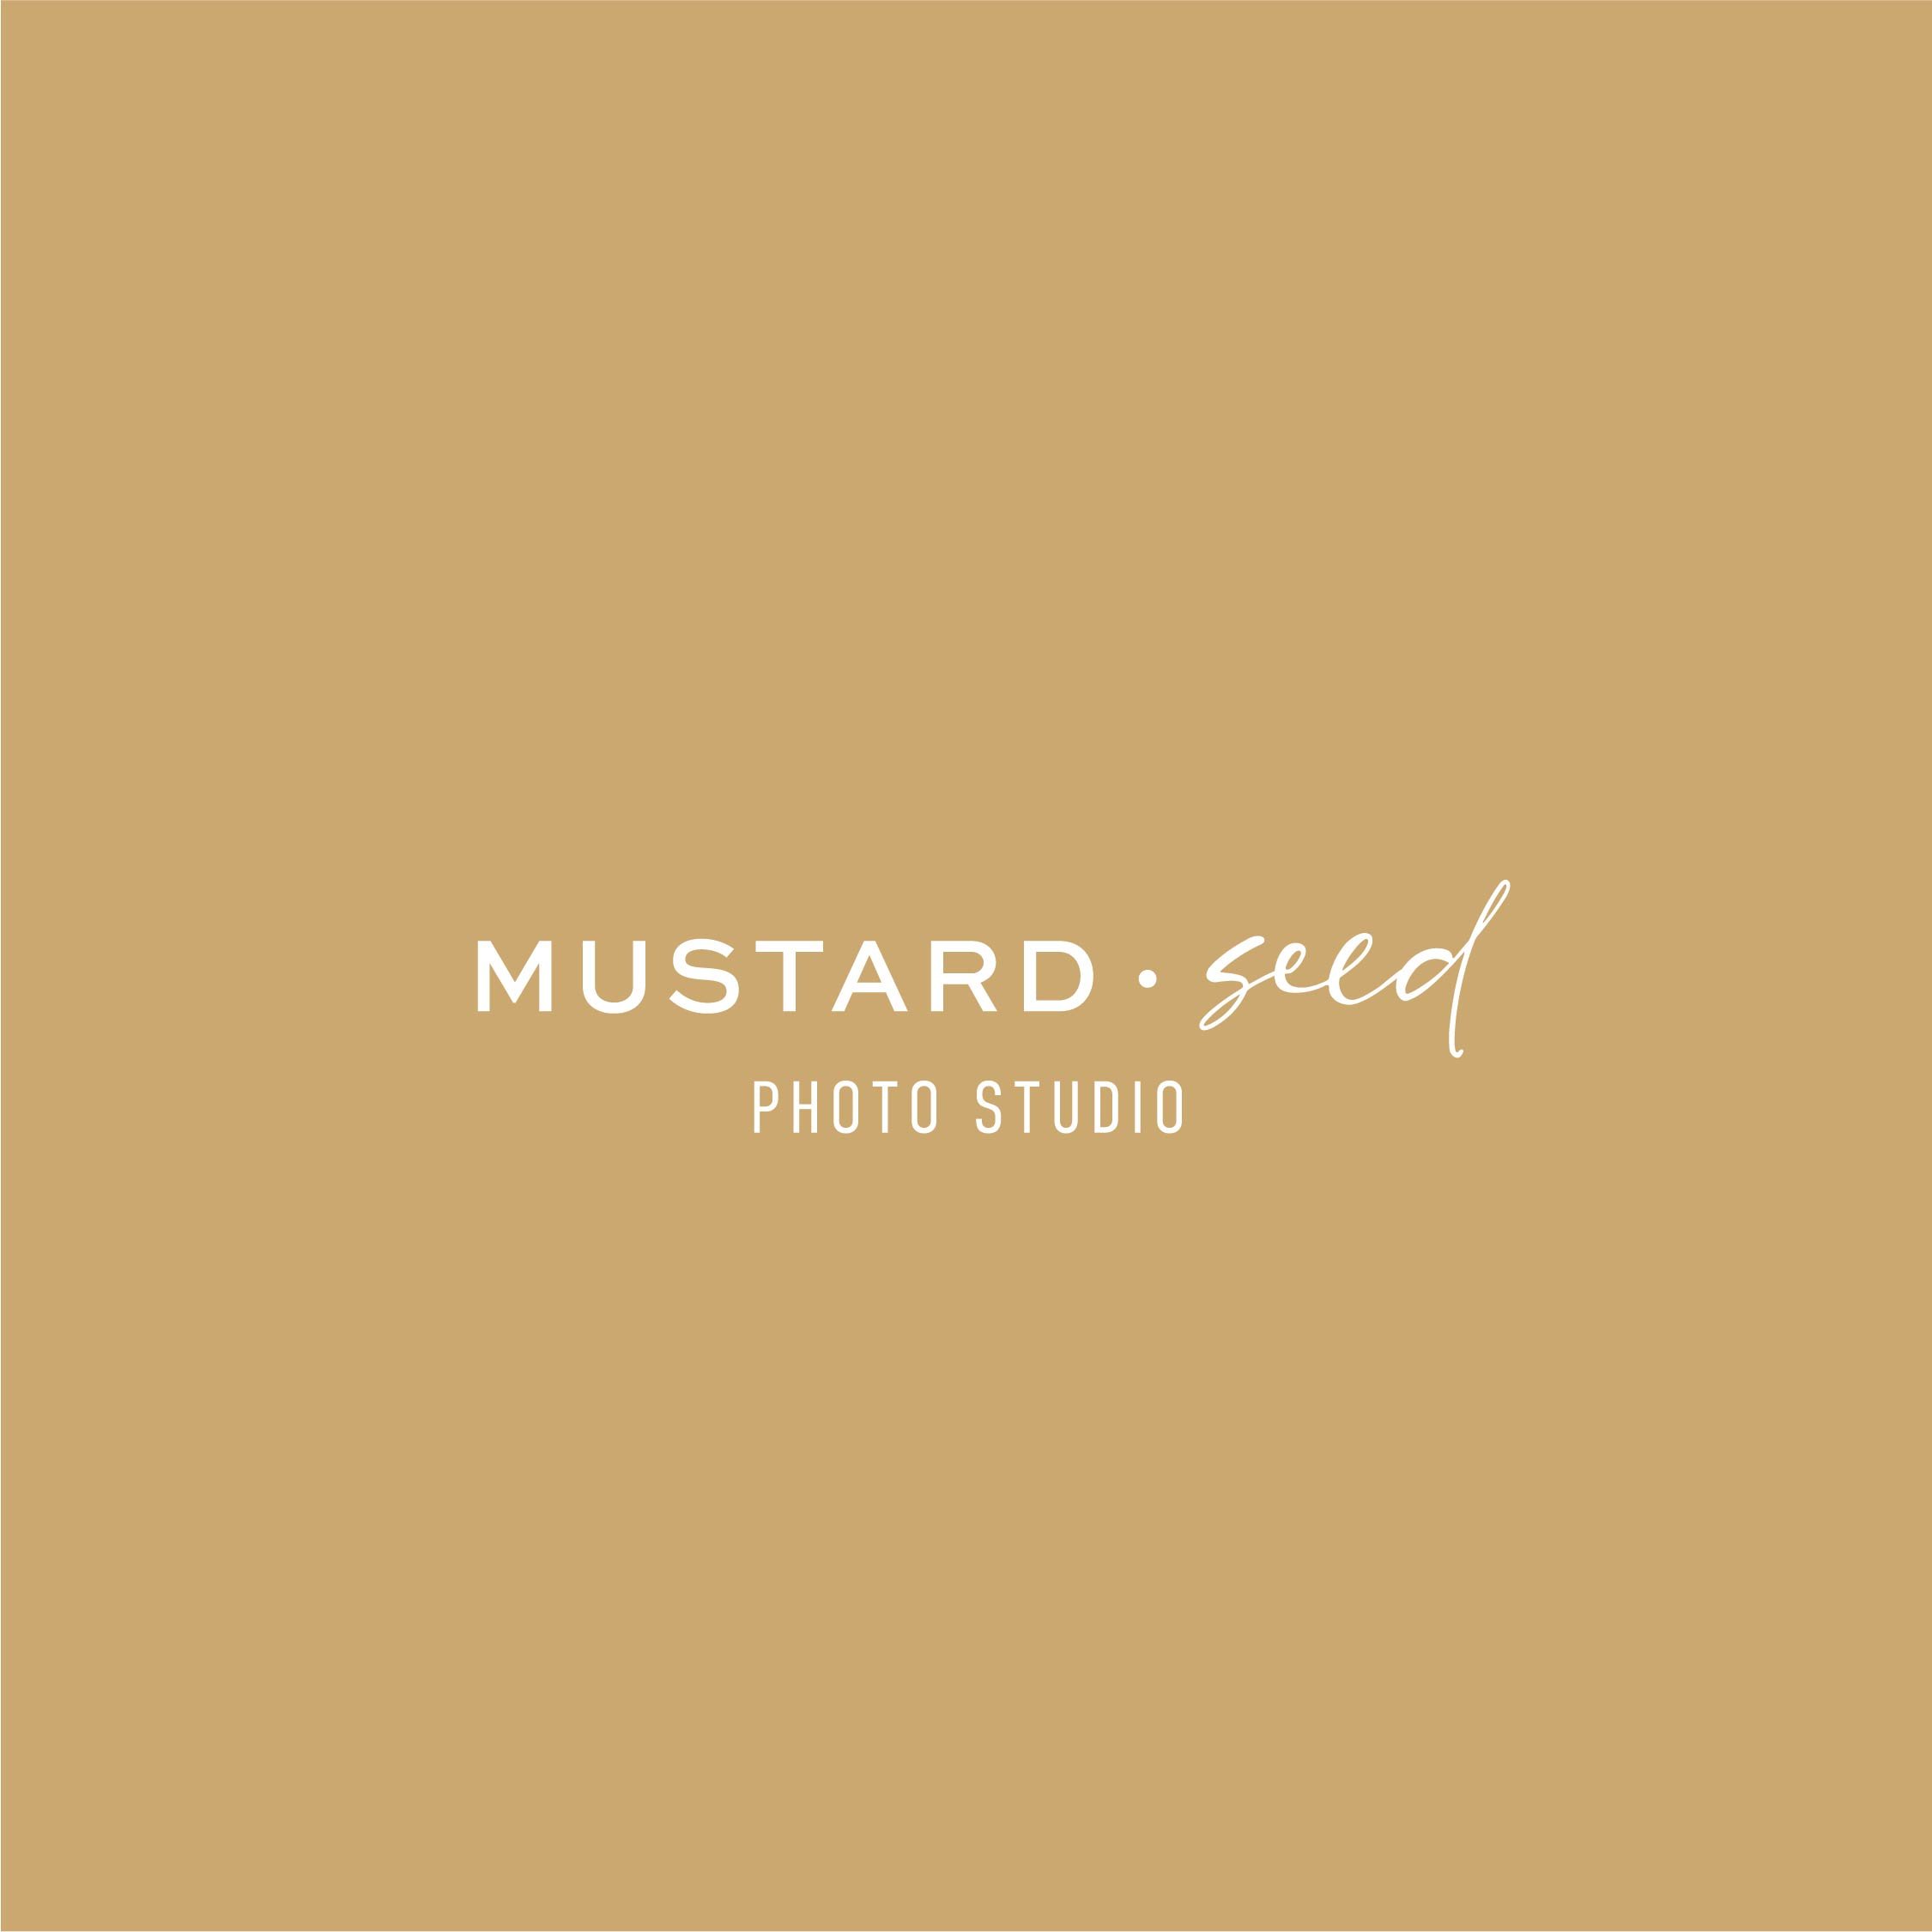 portfolio 2022 katie loerts_mustard seed 2.jpg